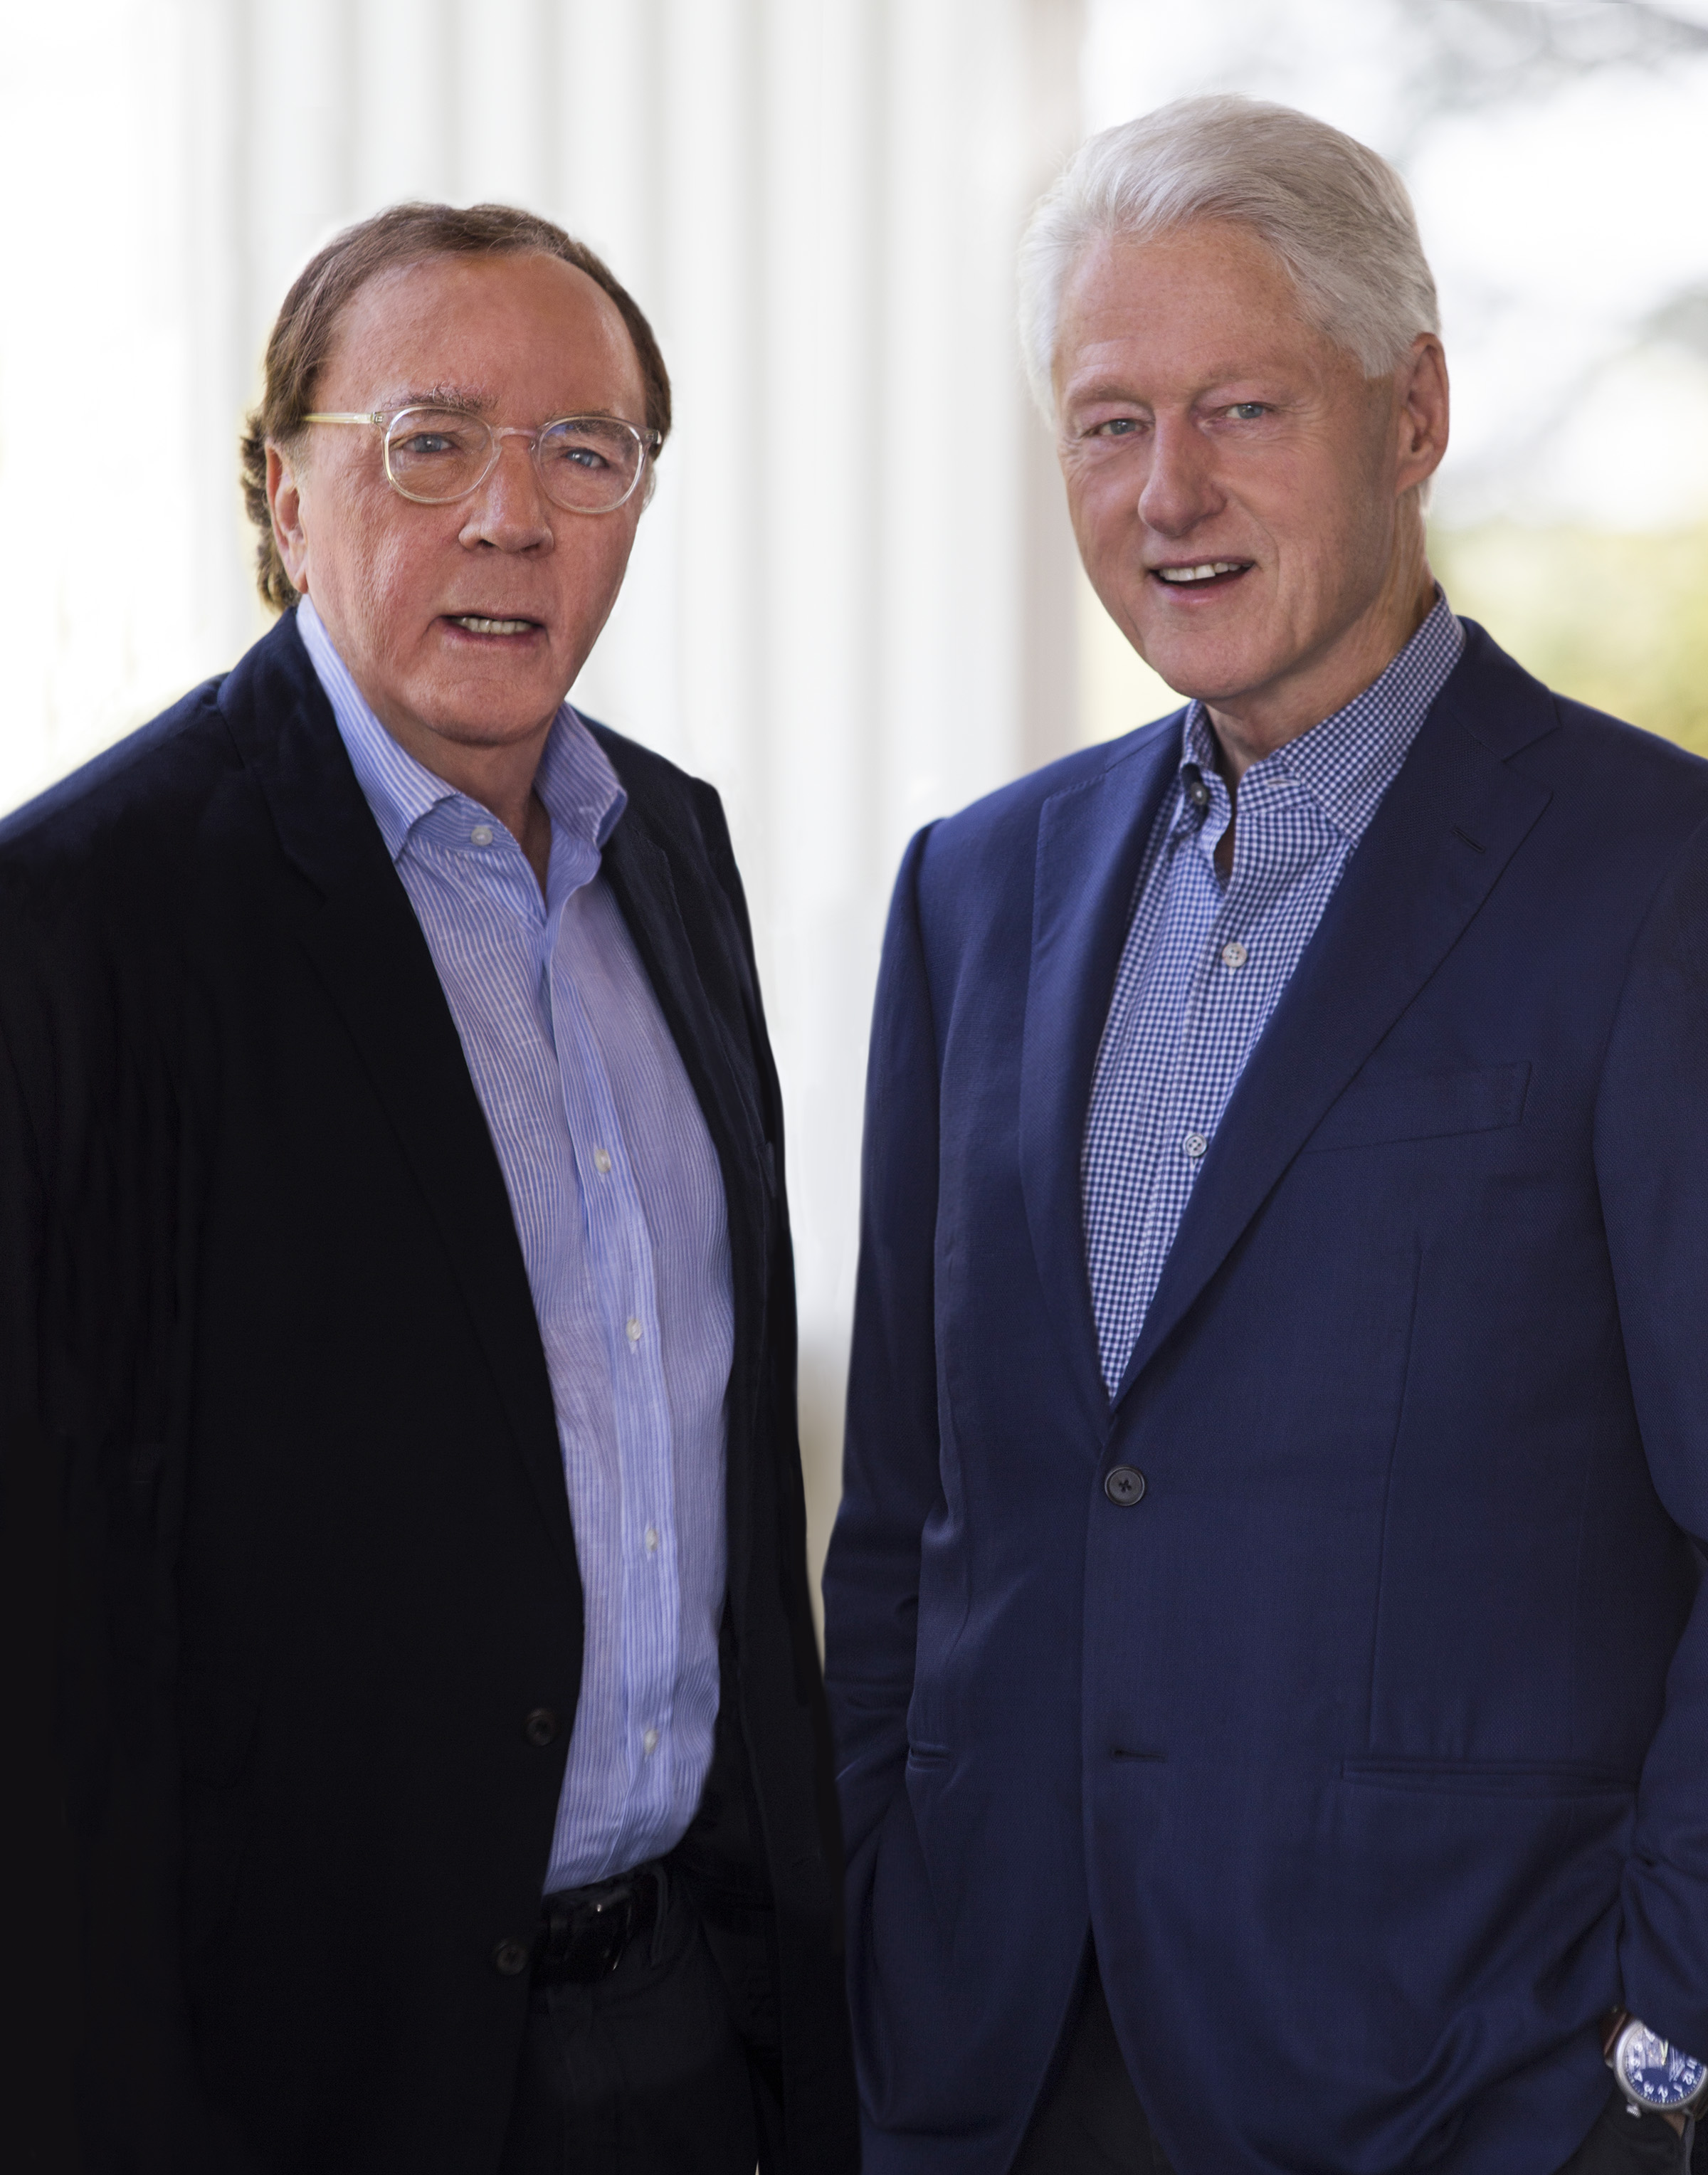 Author James Patterson and former President Bill Clinton (David Burnett)